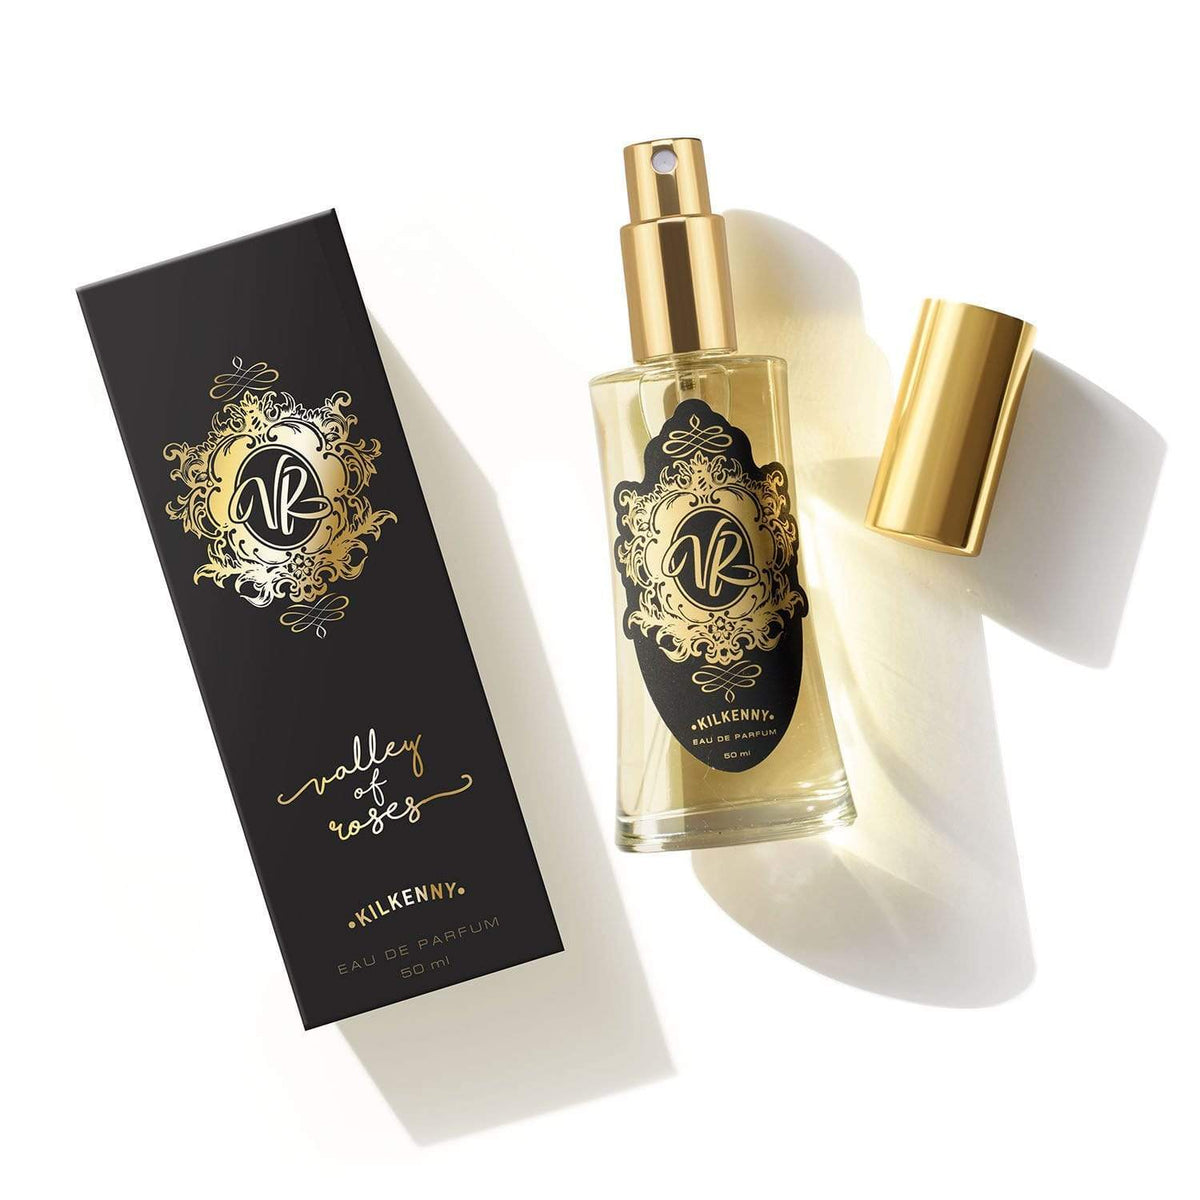 New Drop: Inspired by Louis Vuitton - ALT Fragrances